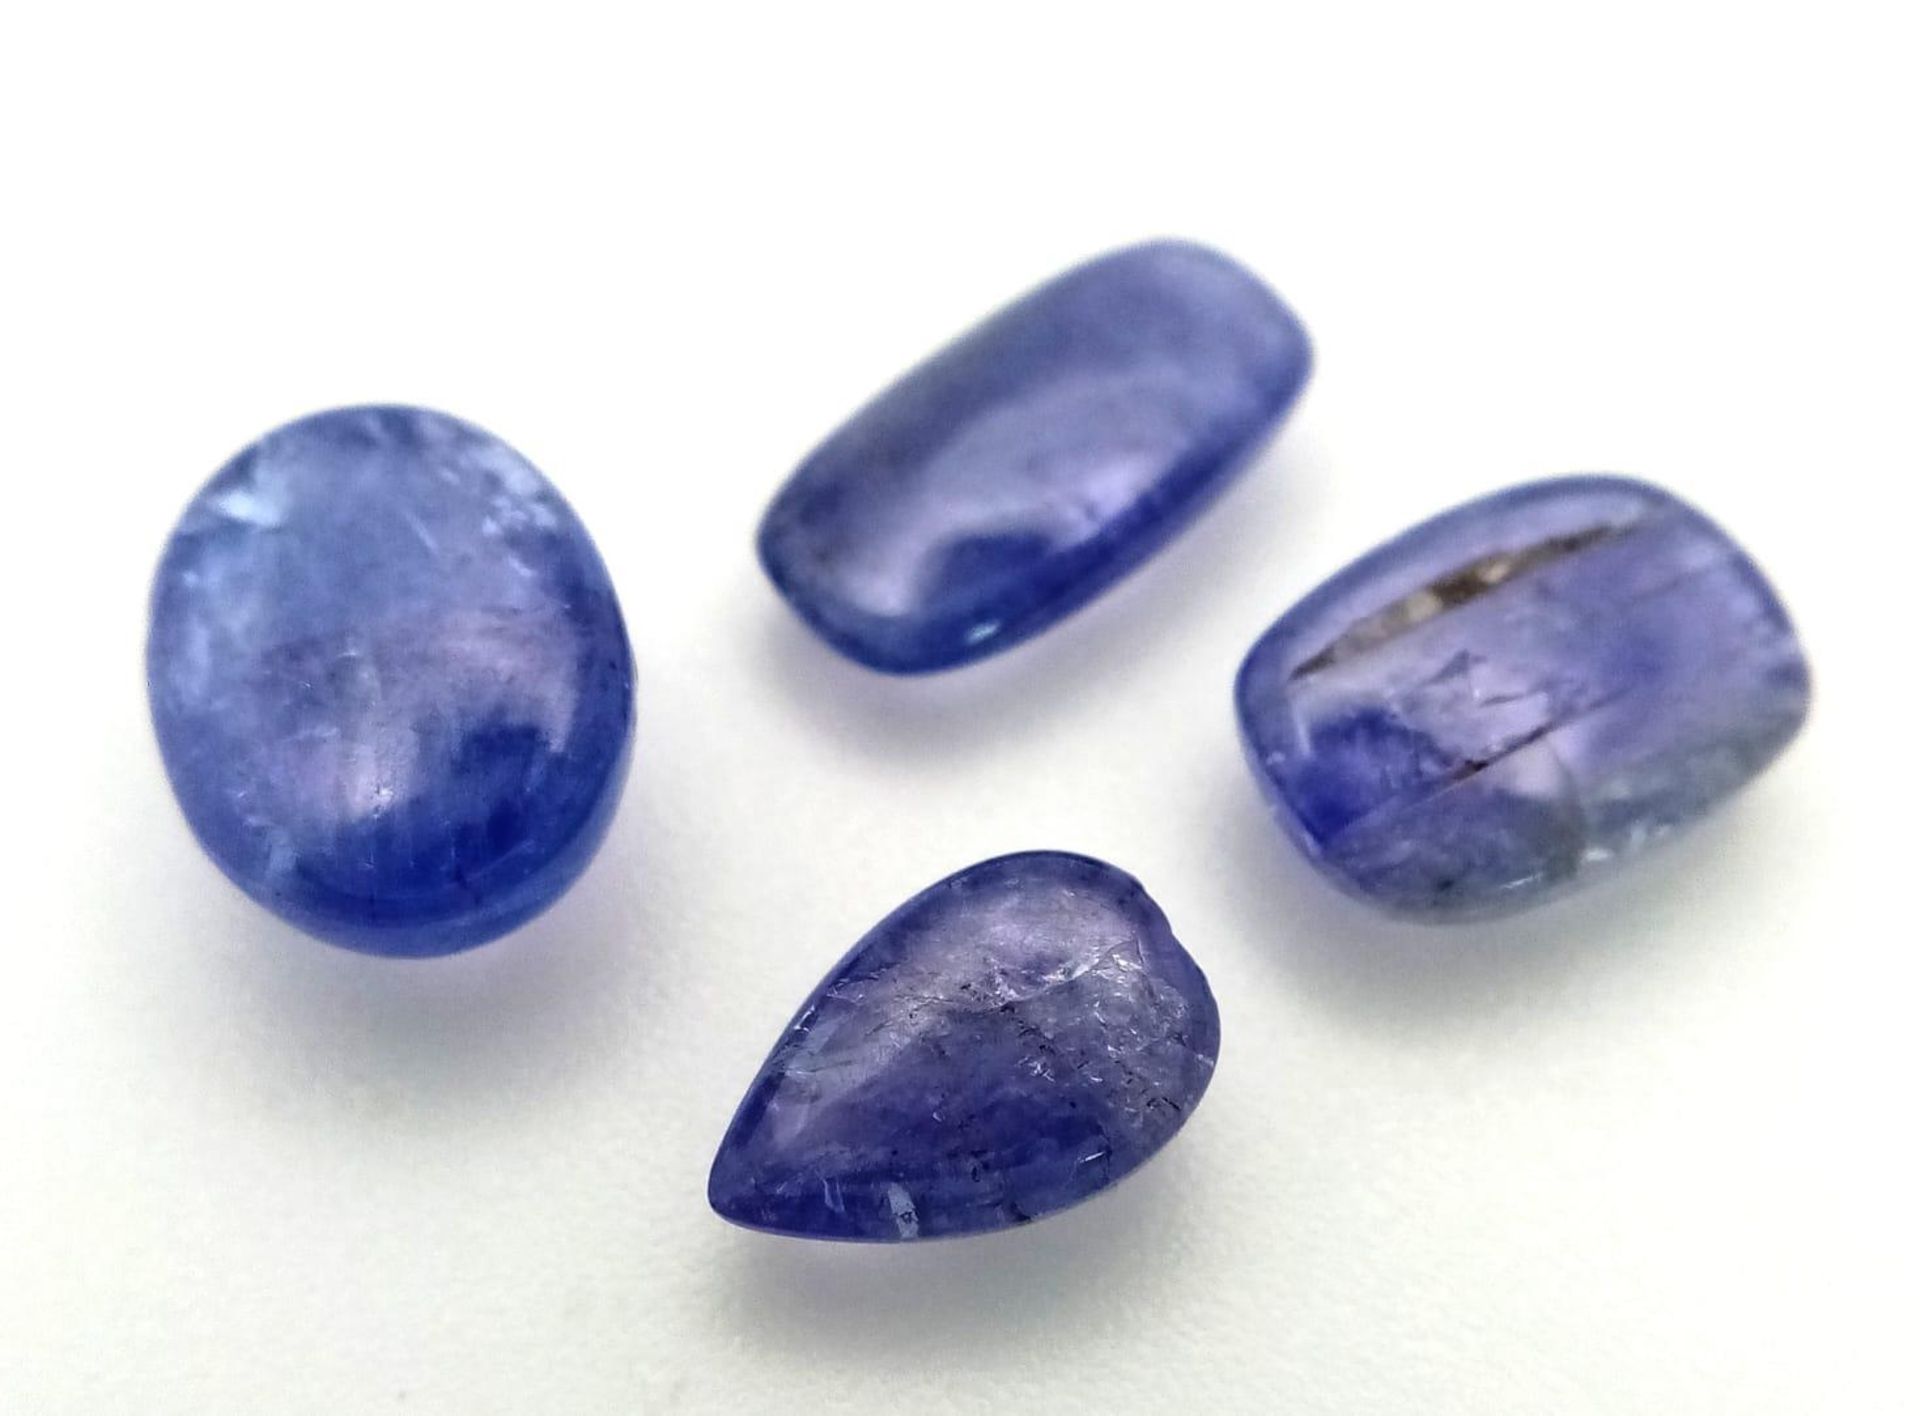 A 10ct Cabochon Tanzanite Gemstones Lot of 4 Pieces. Mixed Shapes. - Bild 2 aus 3